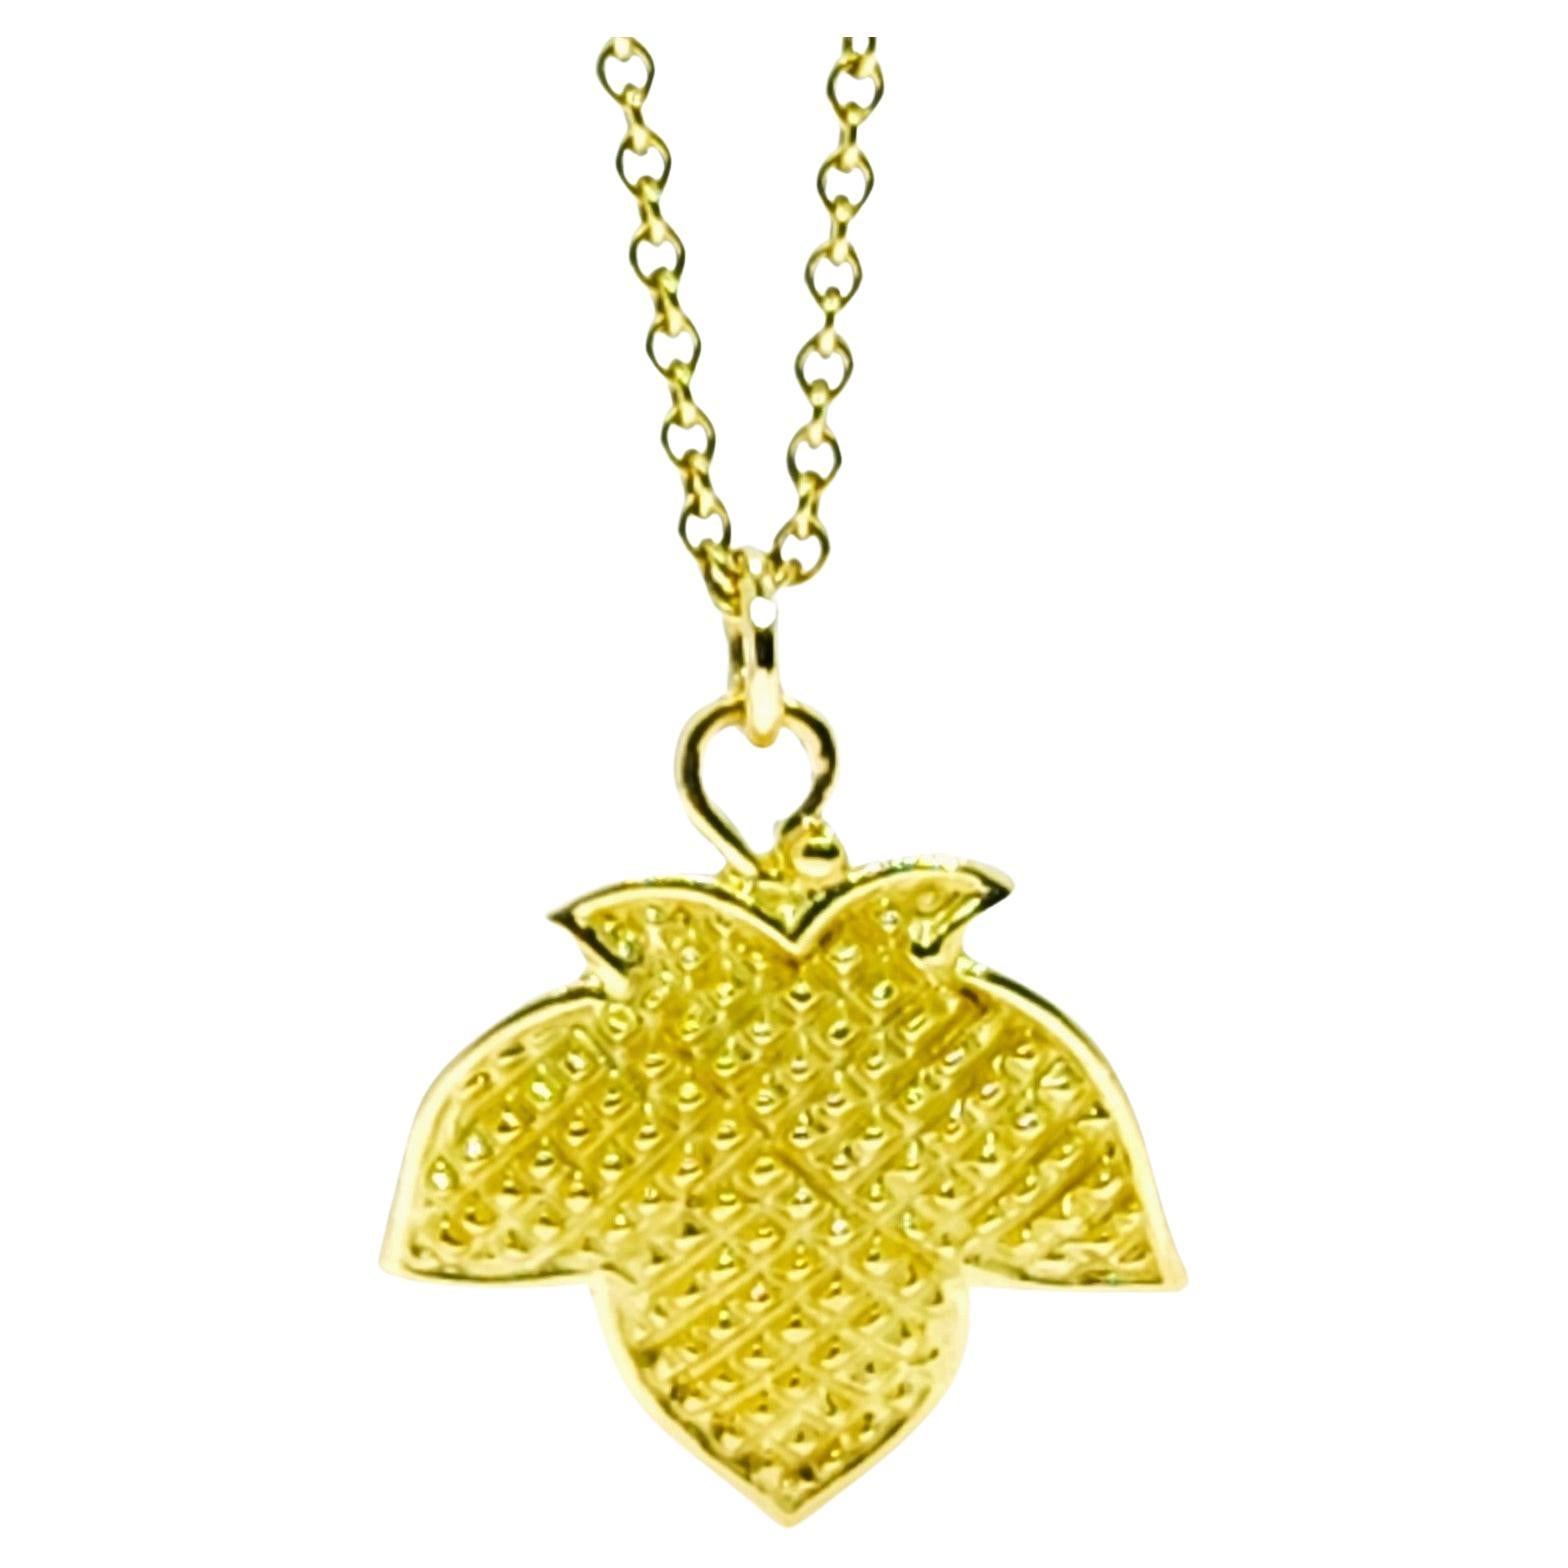 Alison Nagasue Beaded Maple Leaf in 18K Green Gold Pendant